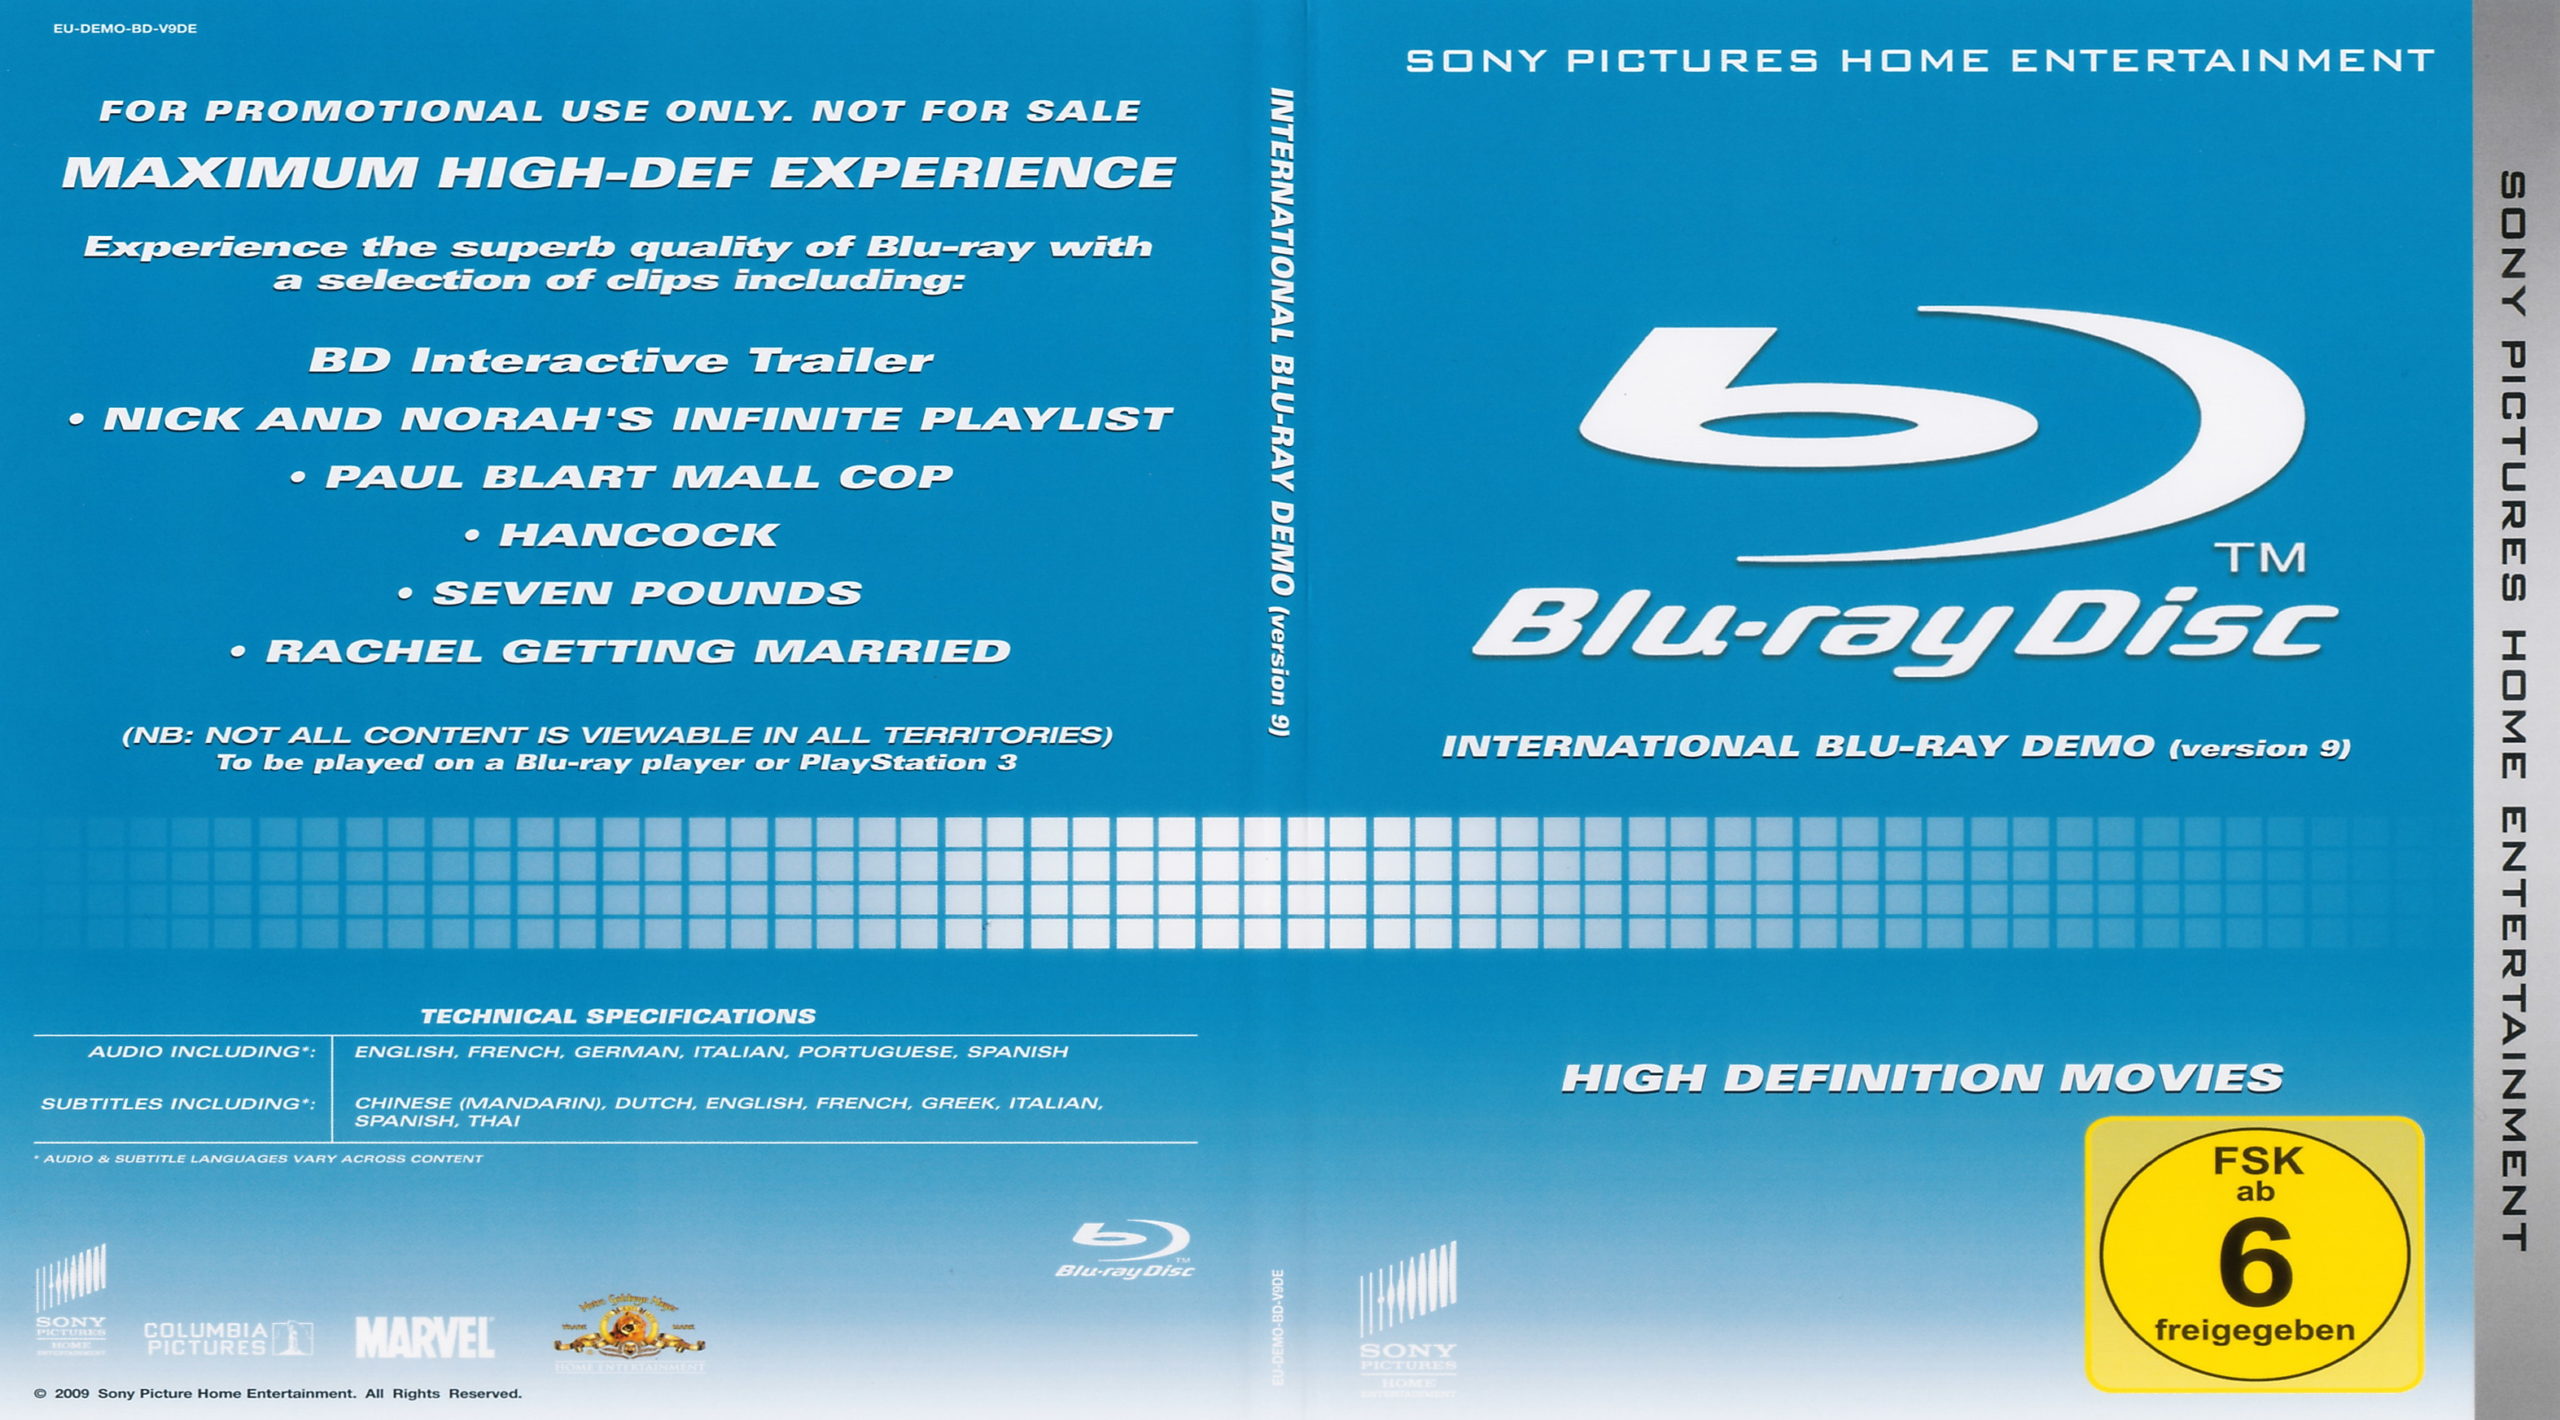 sphe-international-blu-ray-demo-v9-fbig